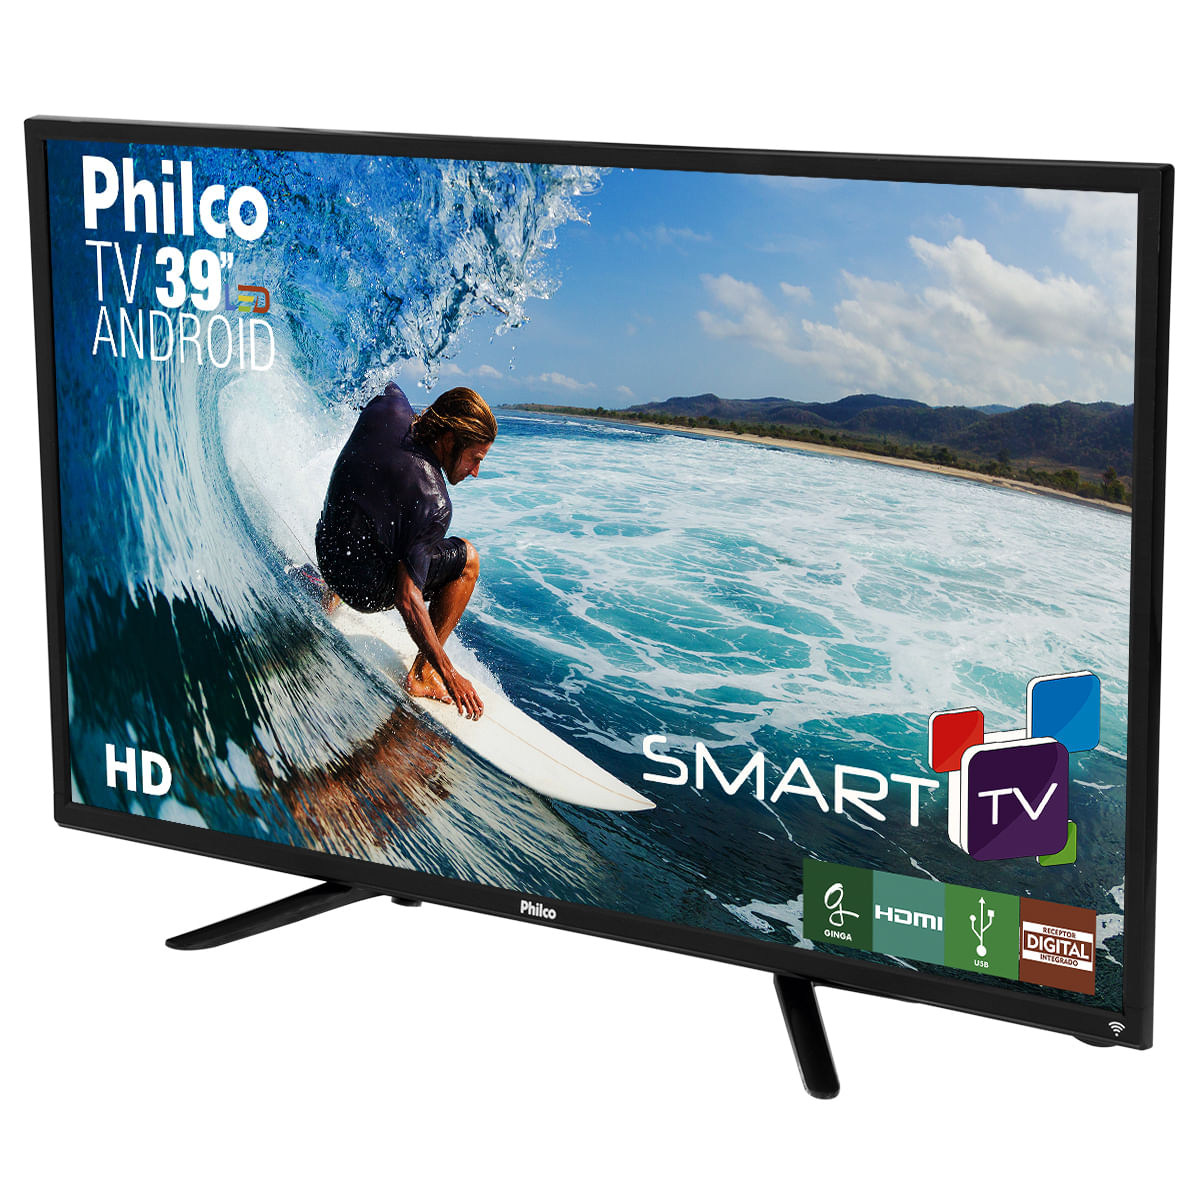 Smart Tv Philco Android Led 39” Ph39n91dsgwa Loja Oficial Philco Eletrodomésticos 0228